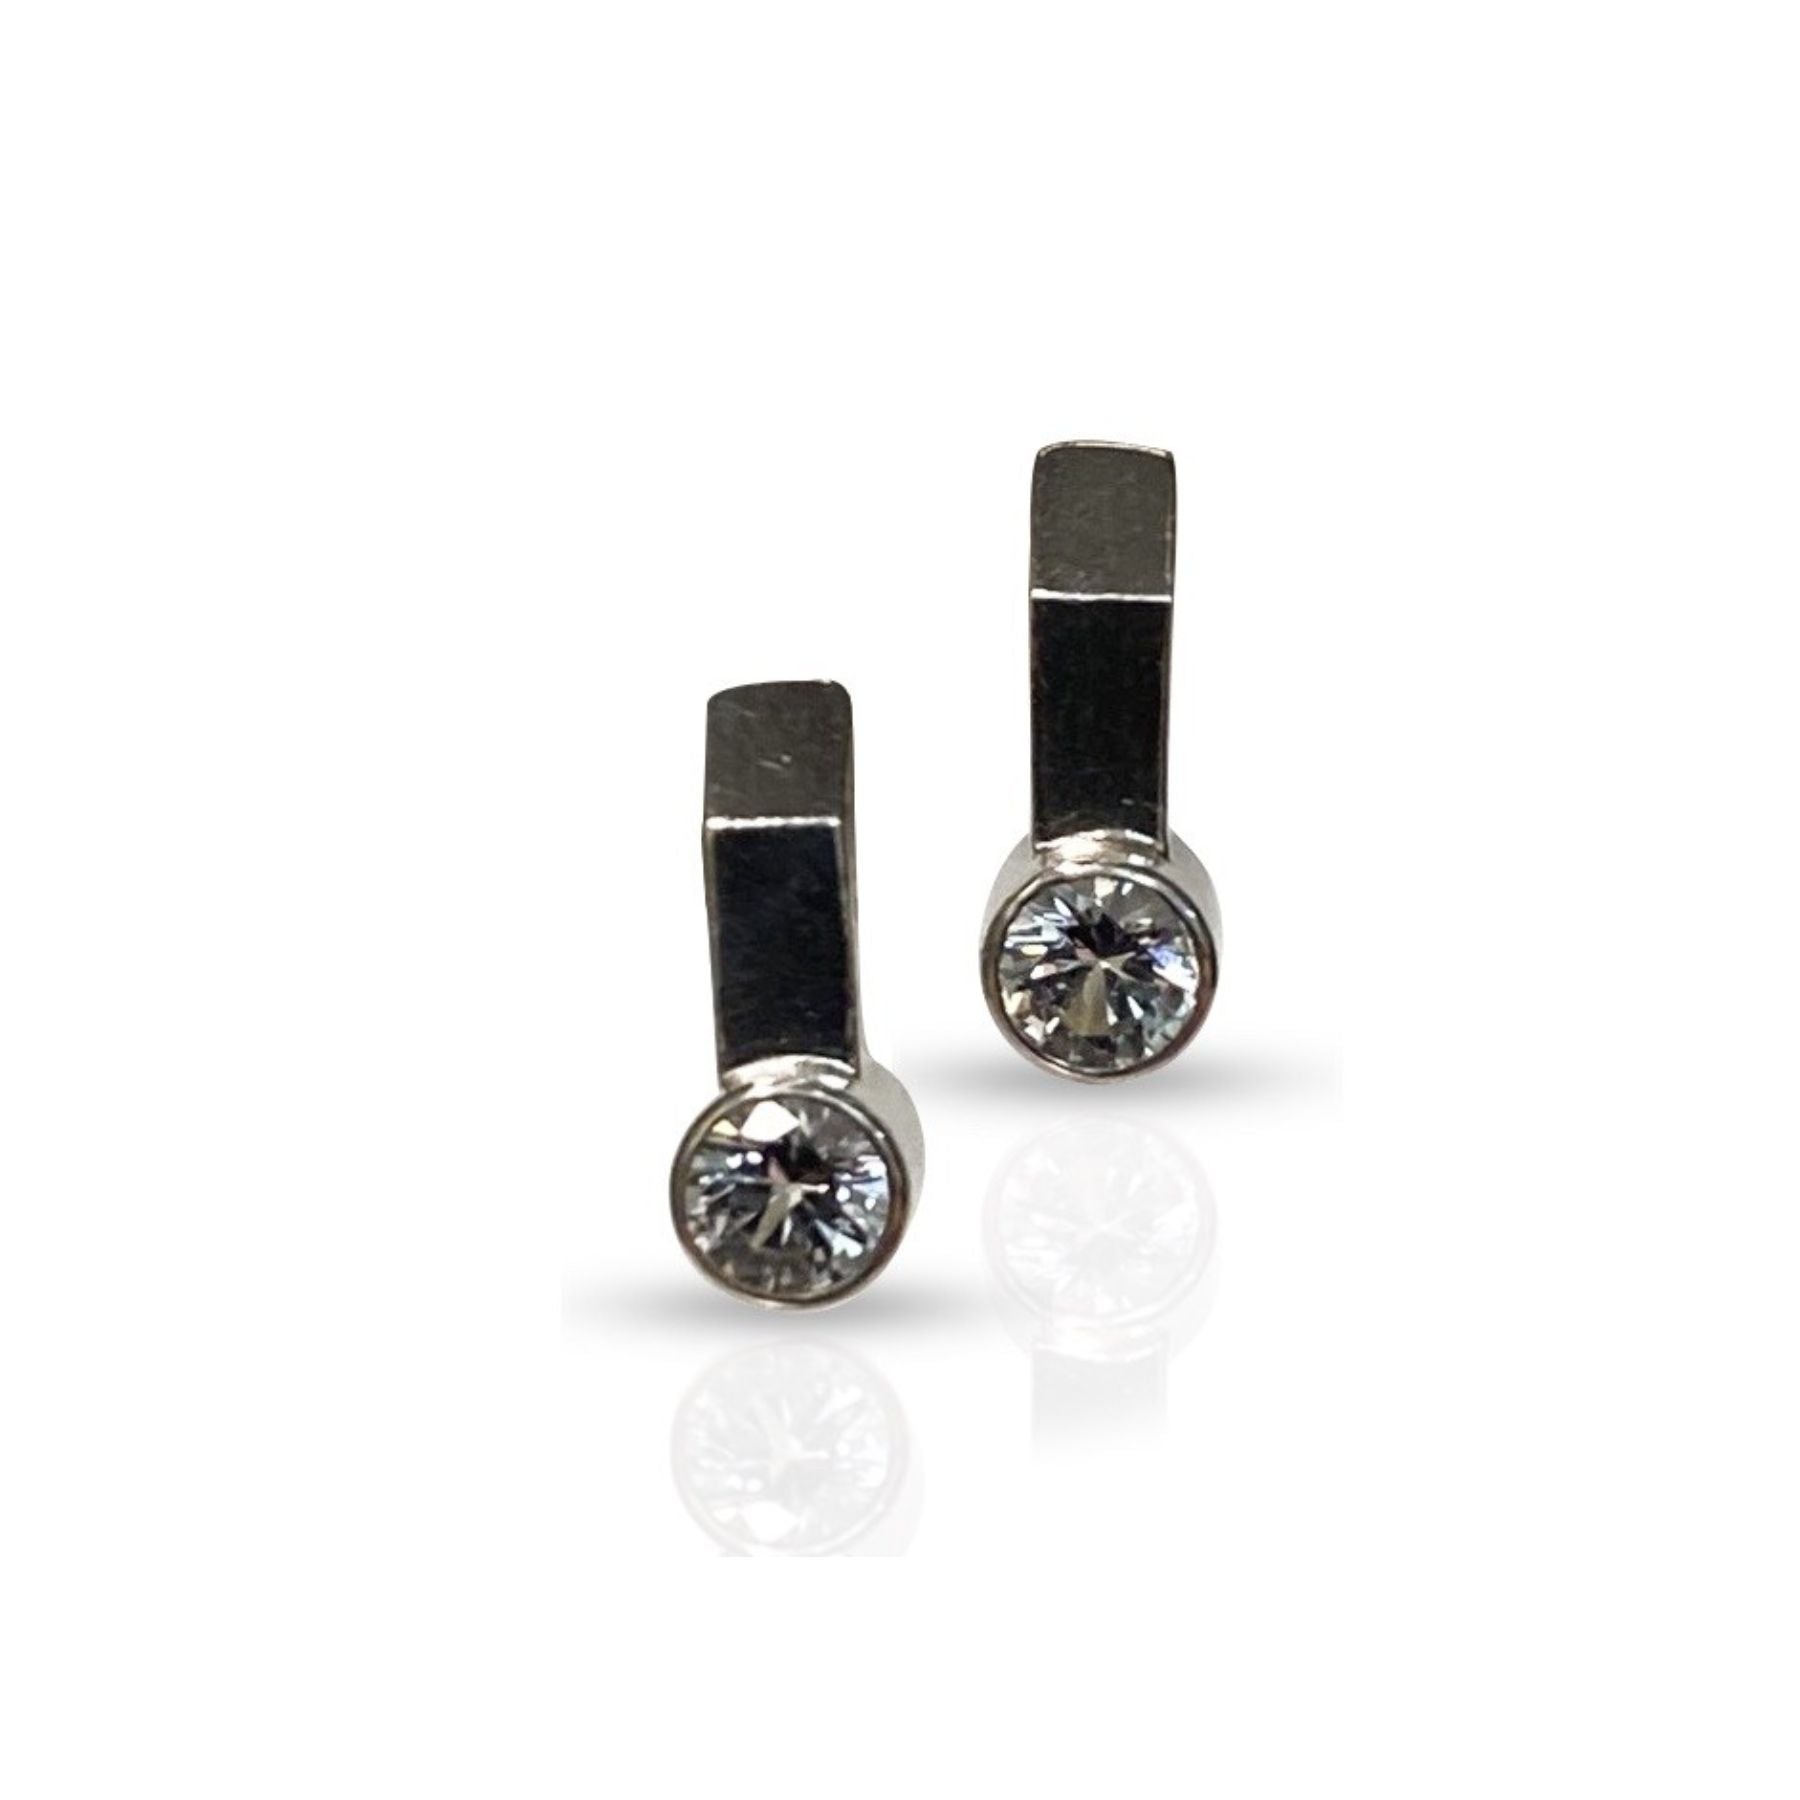 Rectangular Bar Bezel Earrings With Gemstones Bar Collection Gemstones